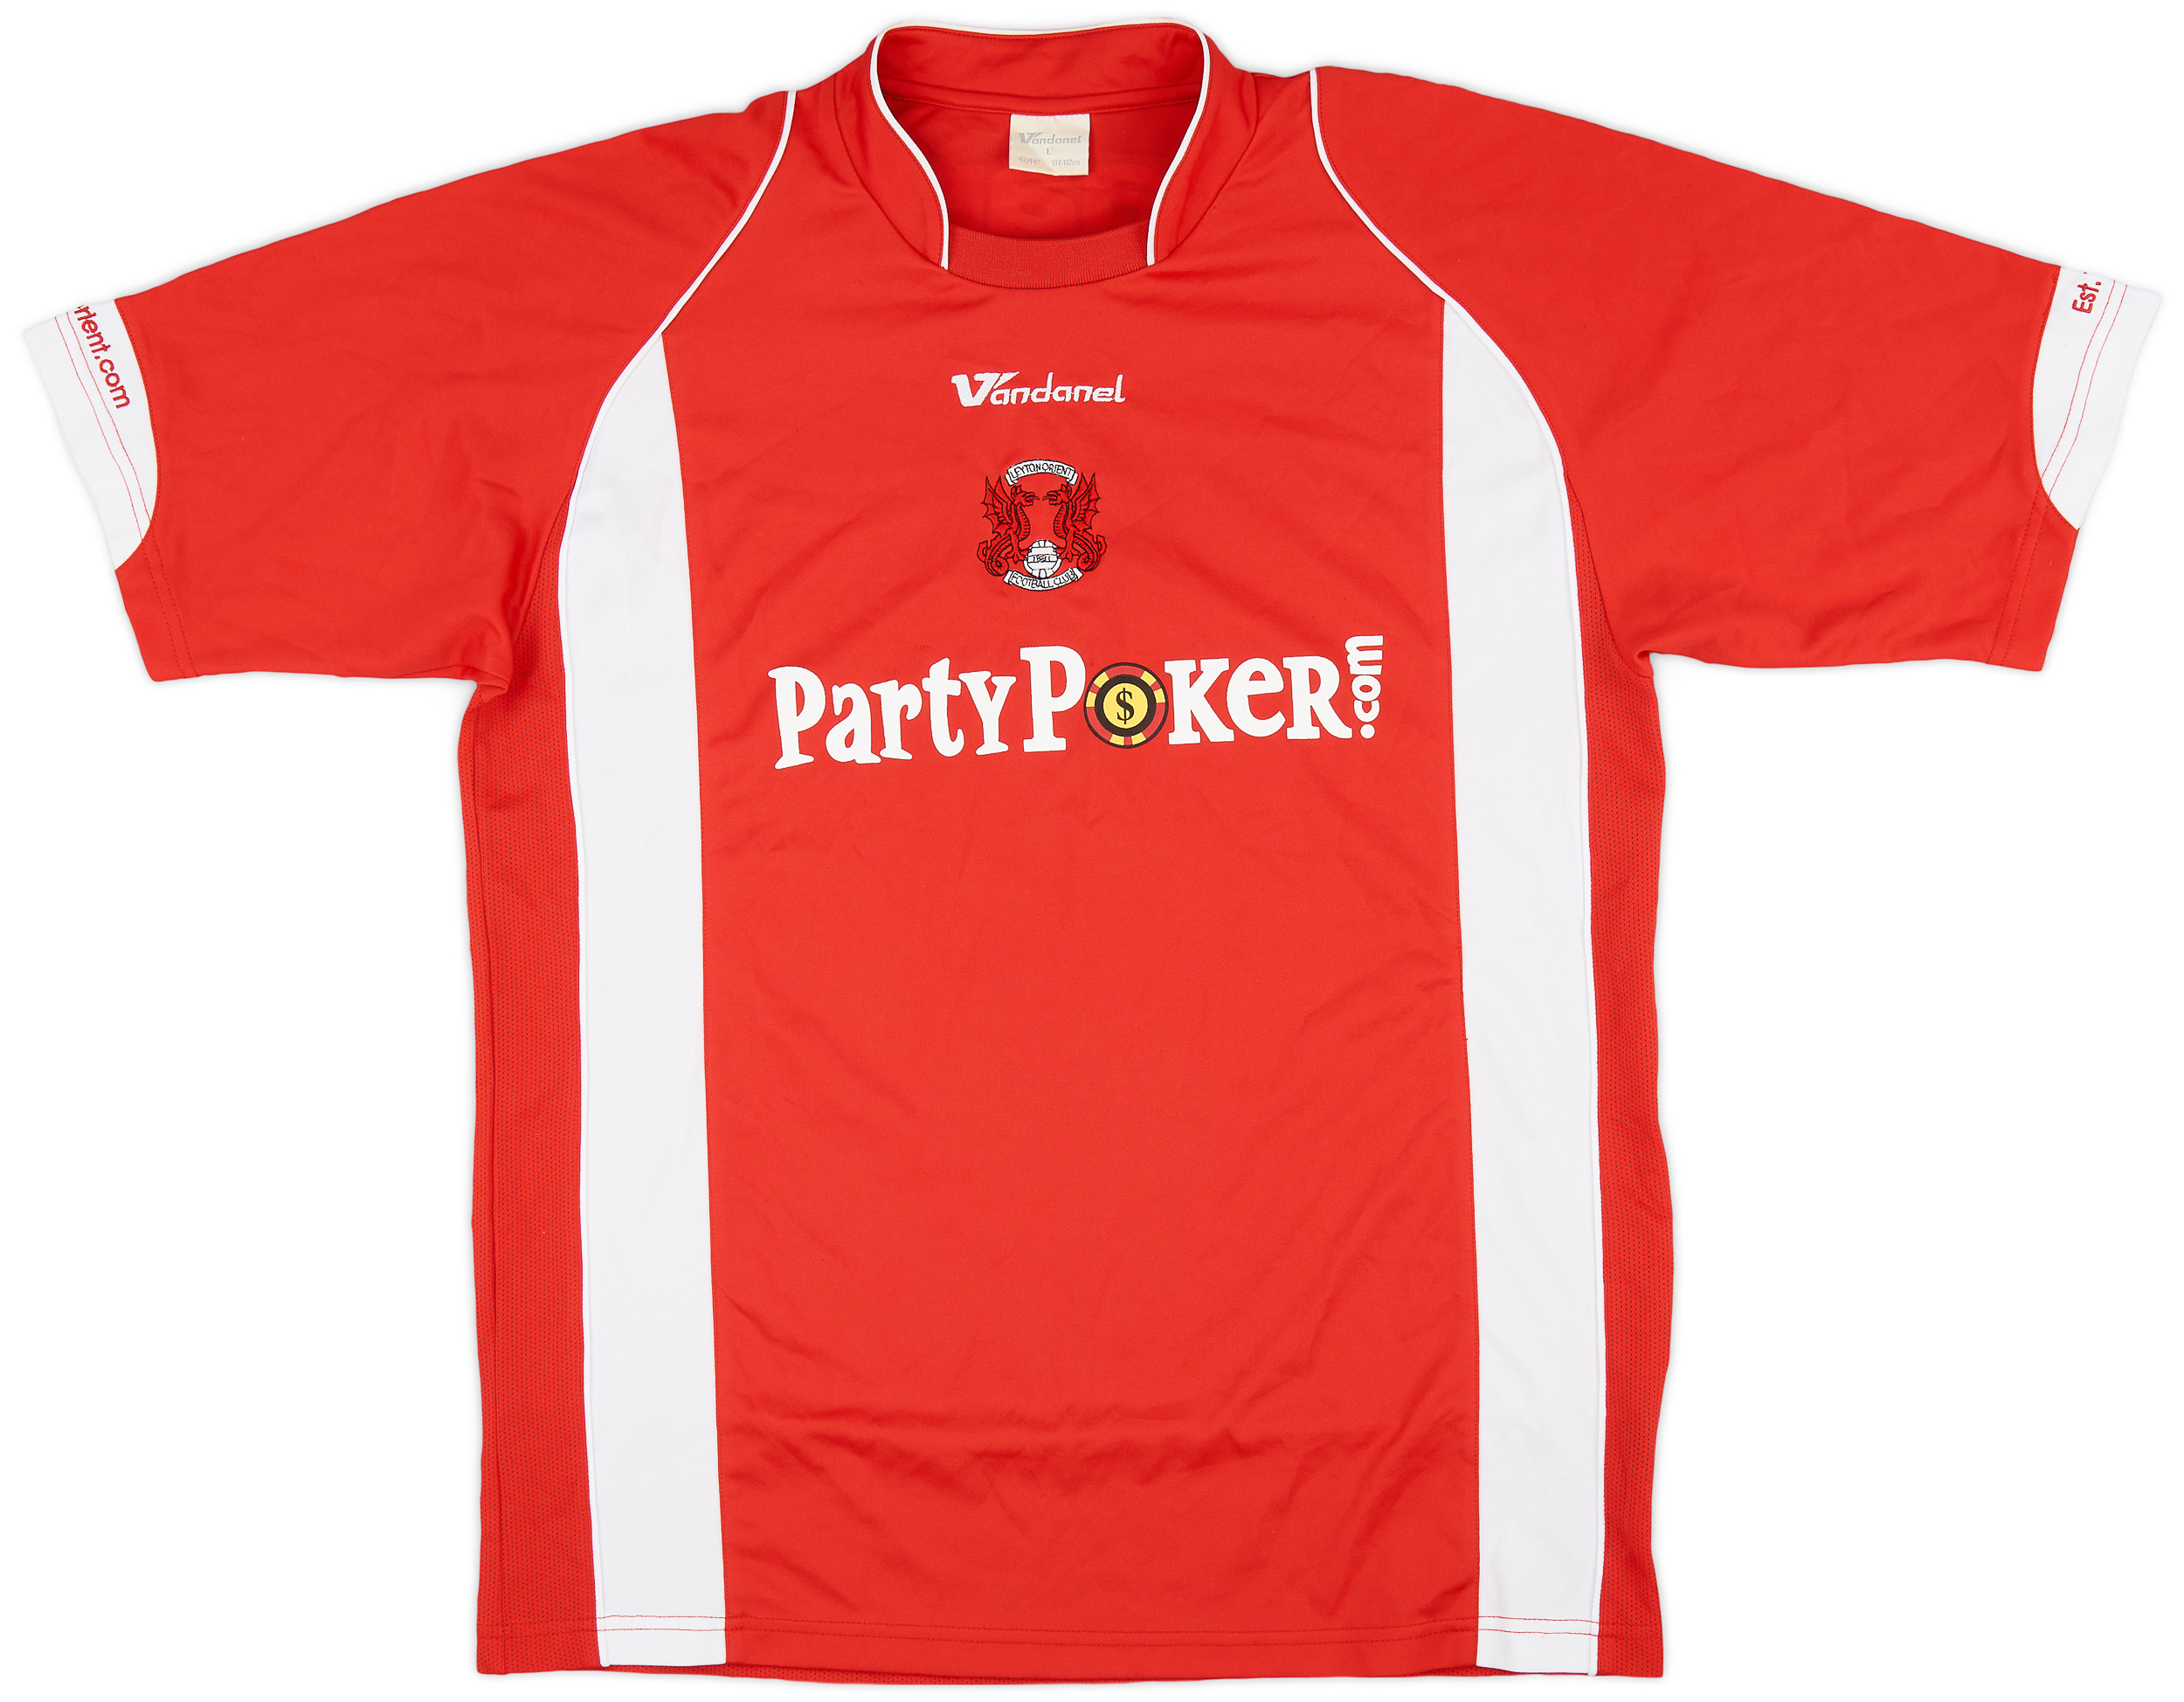 2007-08 Leyton Orient Home Shirt - 9/10 - ()